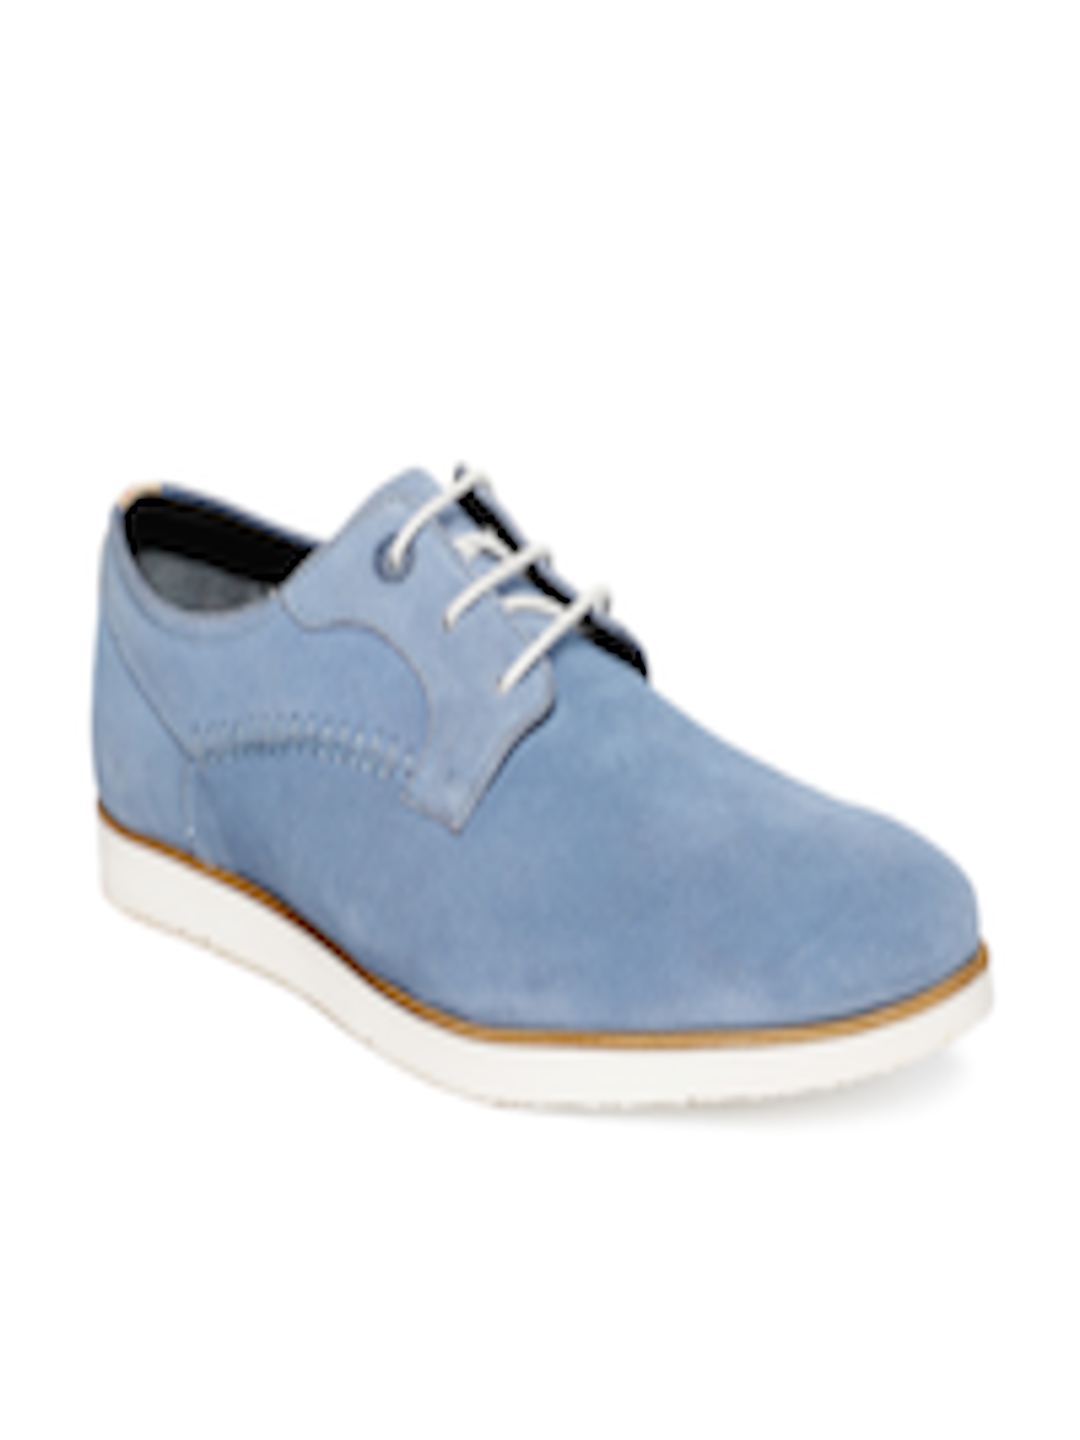 Buy Ruosh Men Blue Suede Sneakers - Casual Shoes for Men 9012479 | Myntra